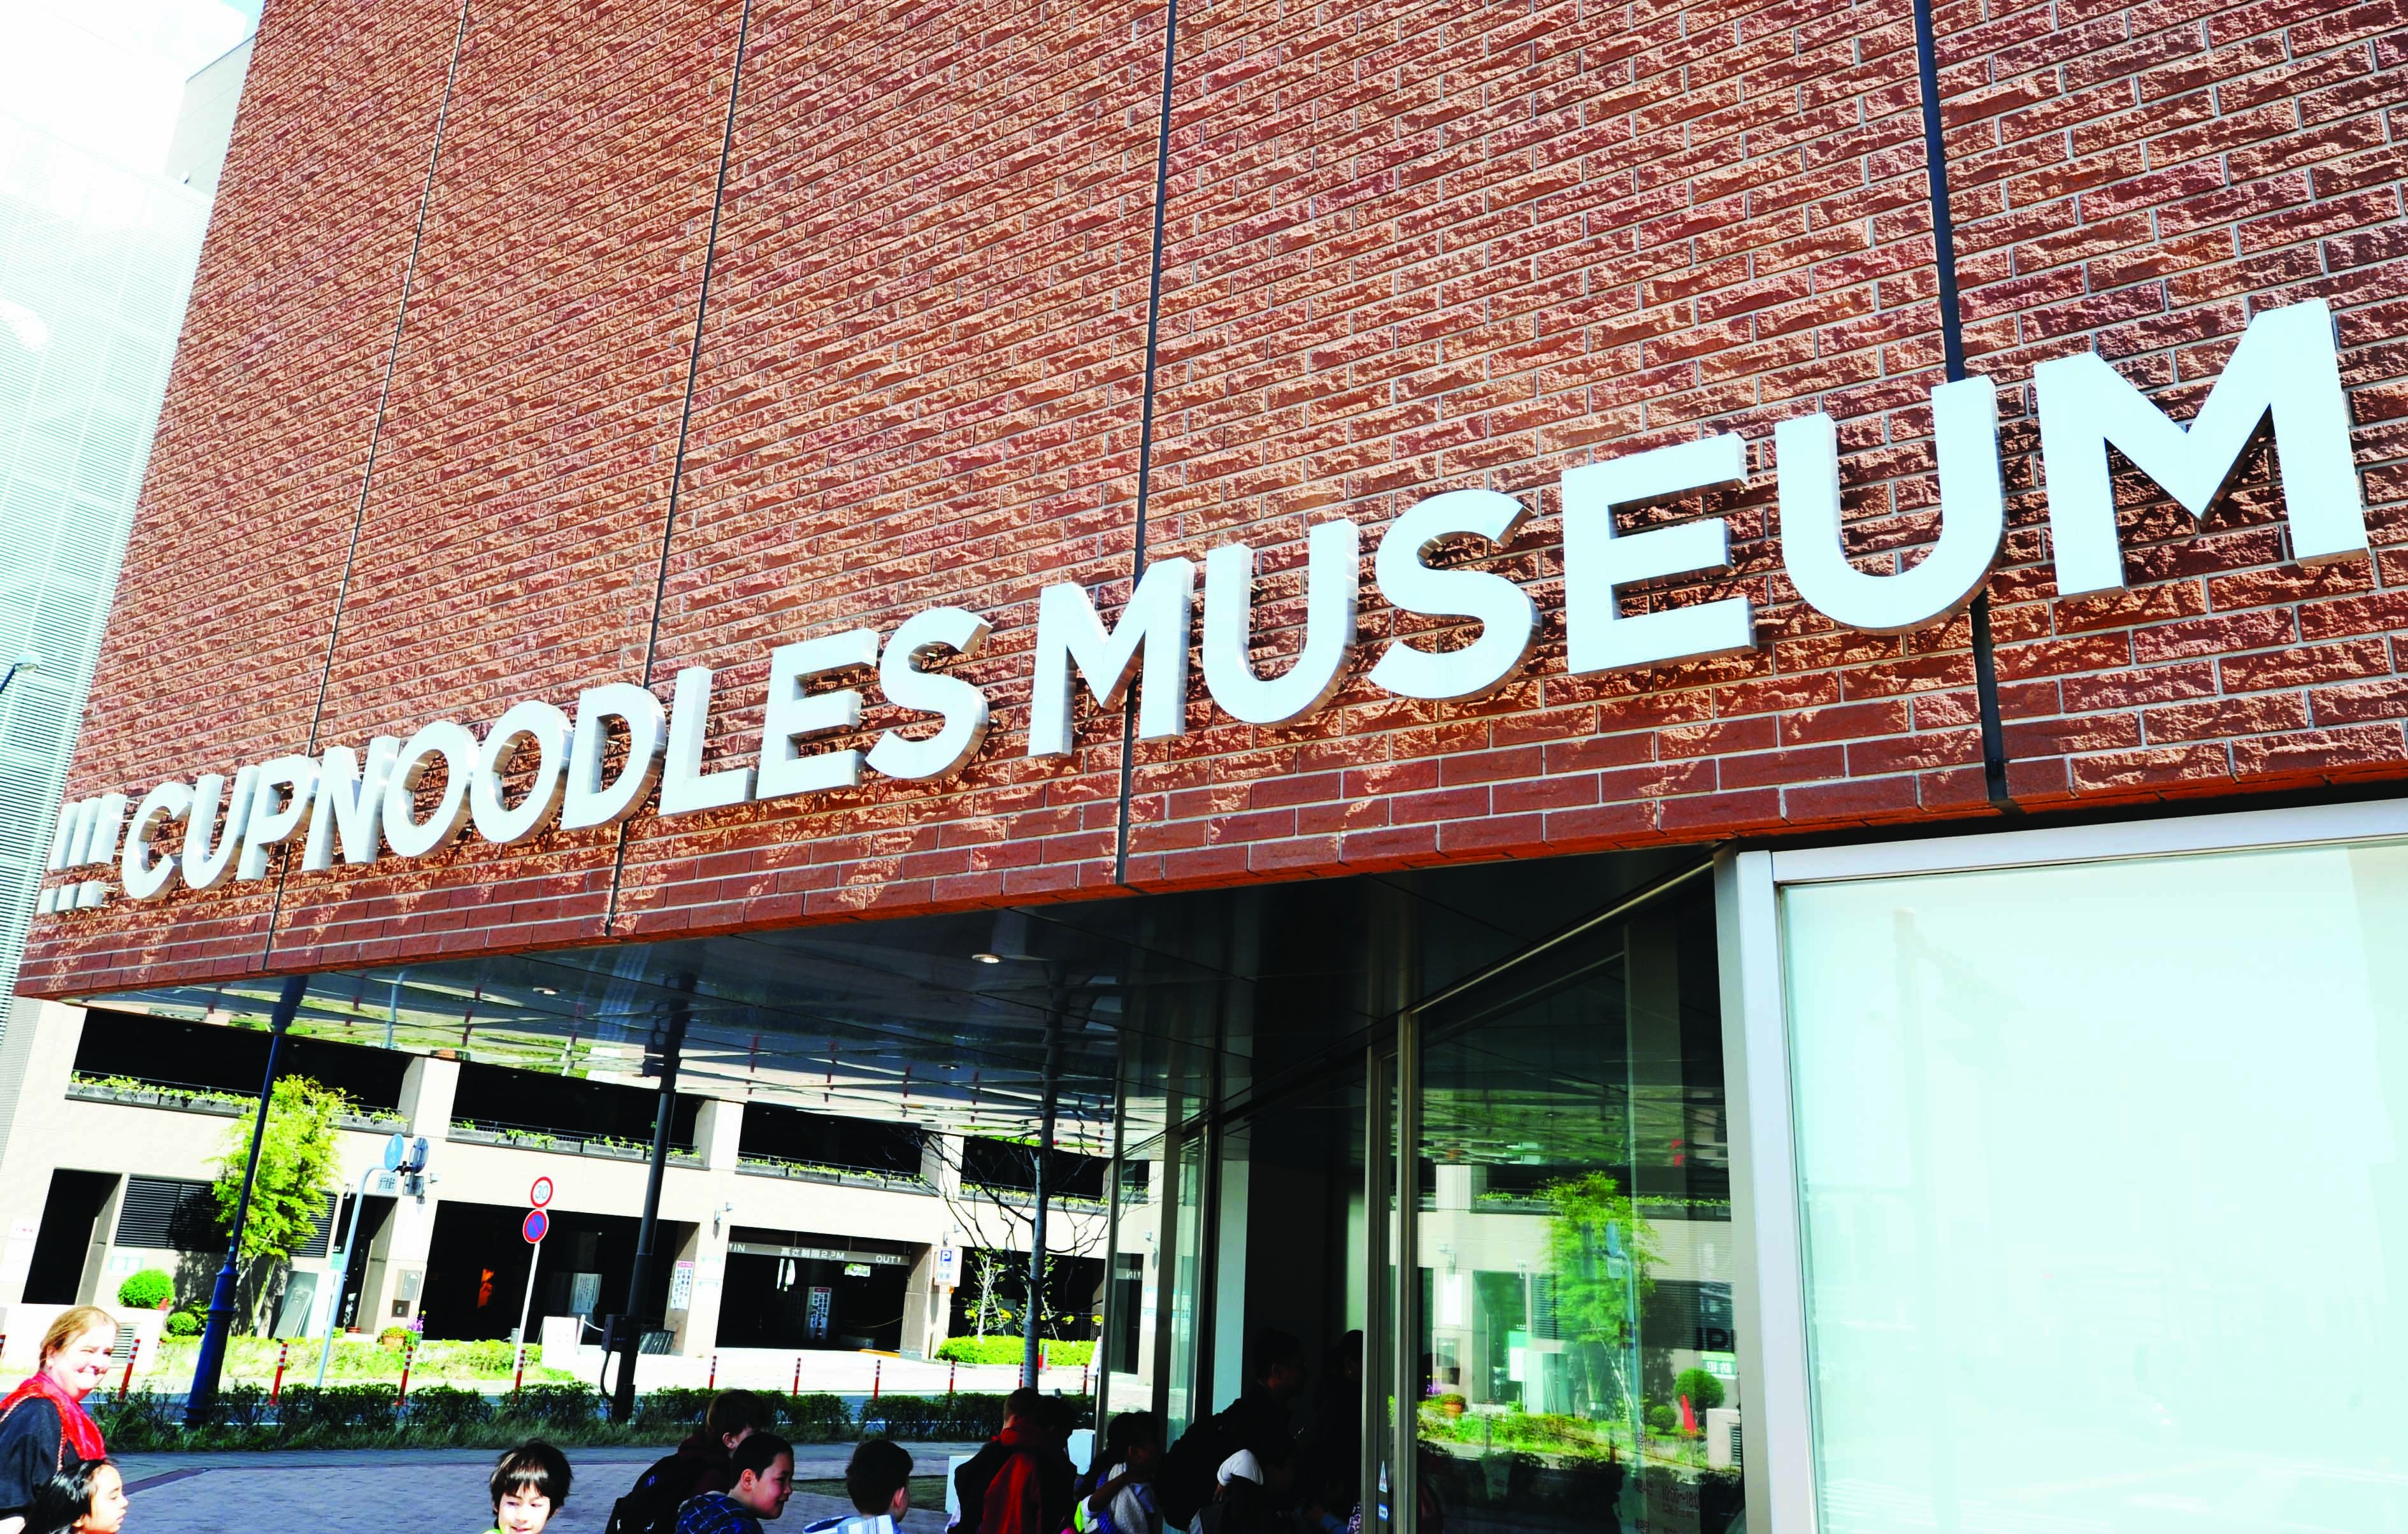 Students in Japan visit interactive museum dedicated to instant ramen